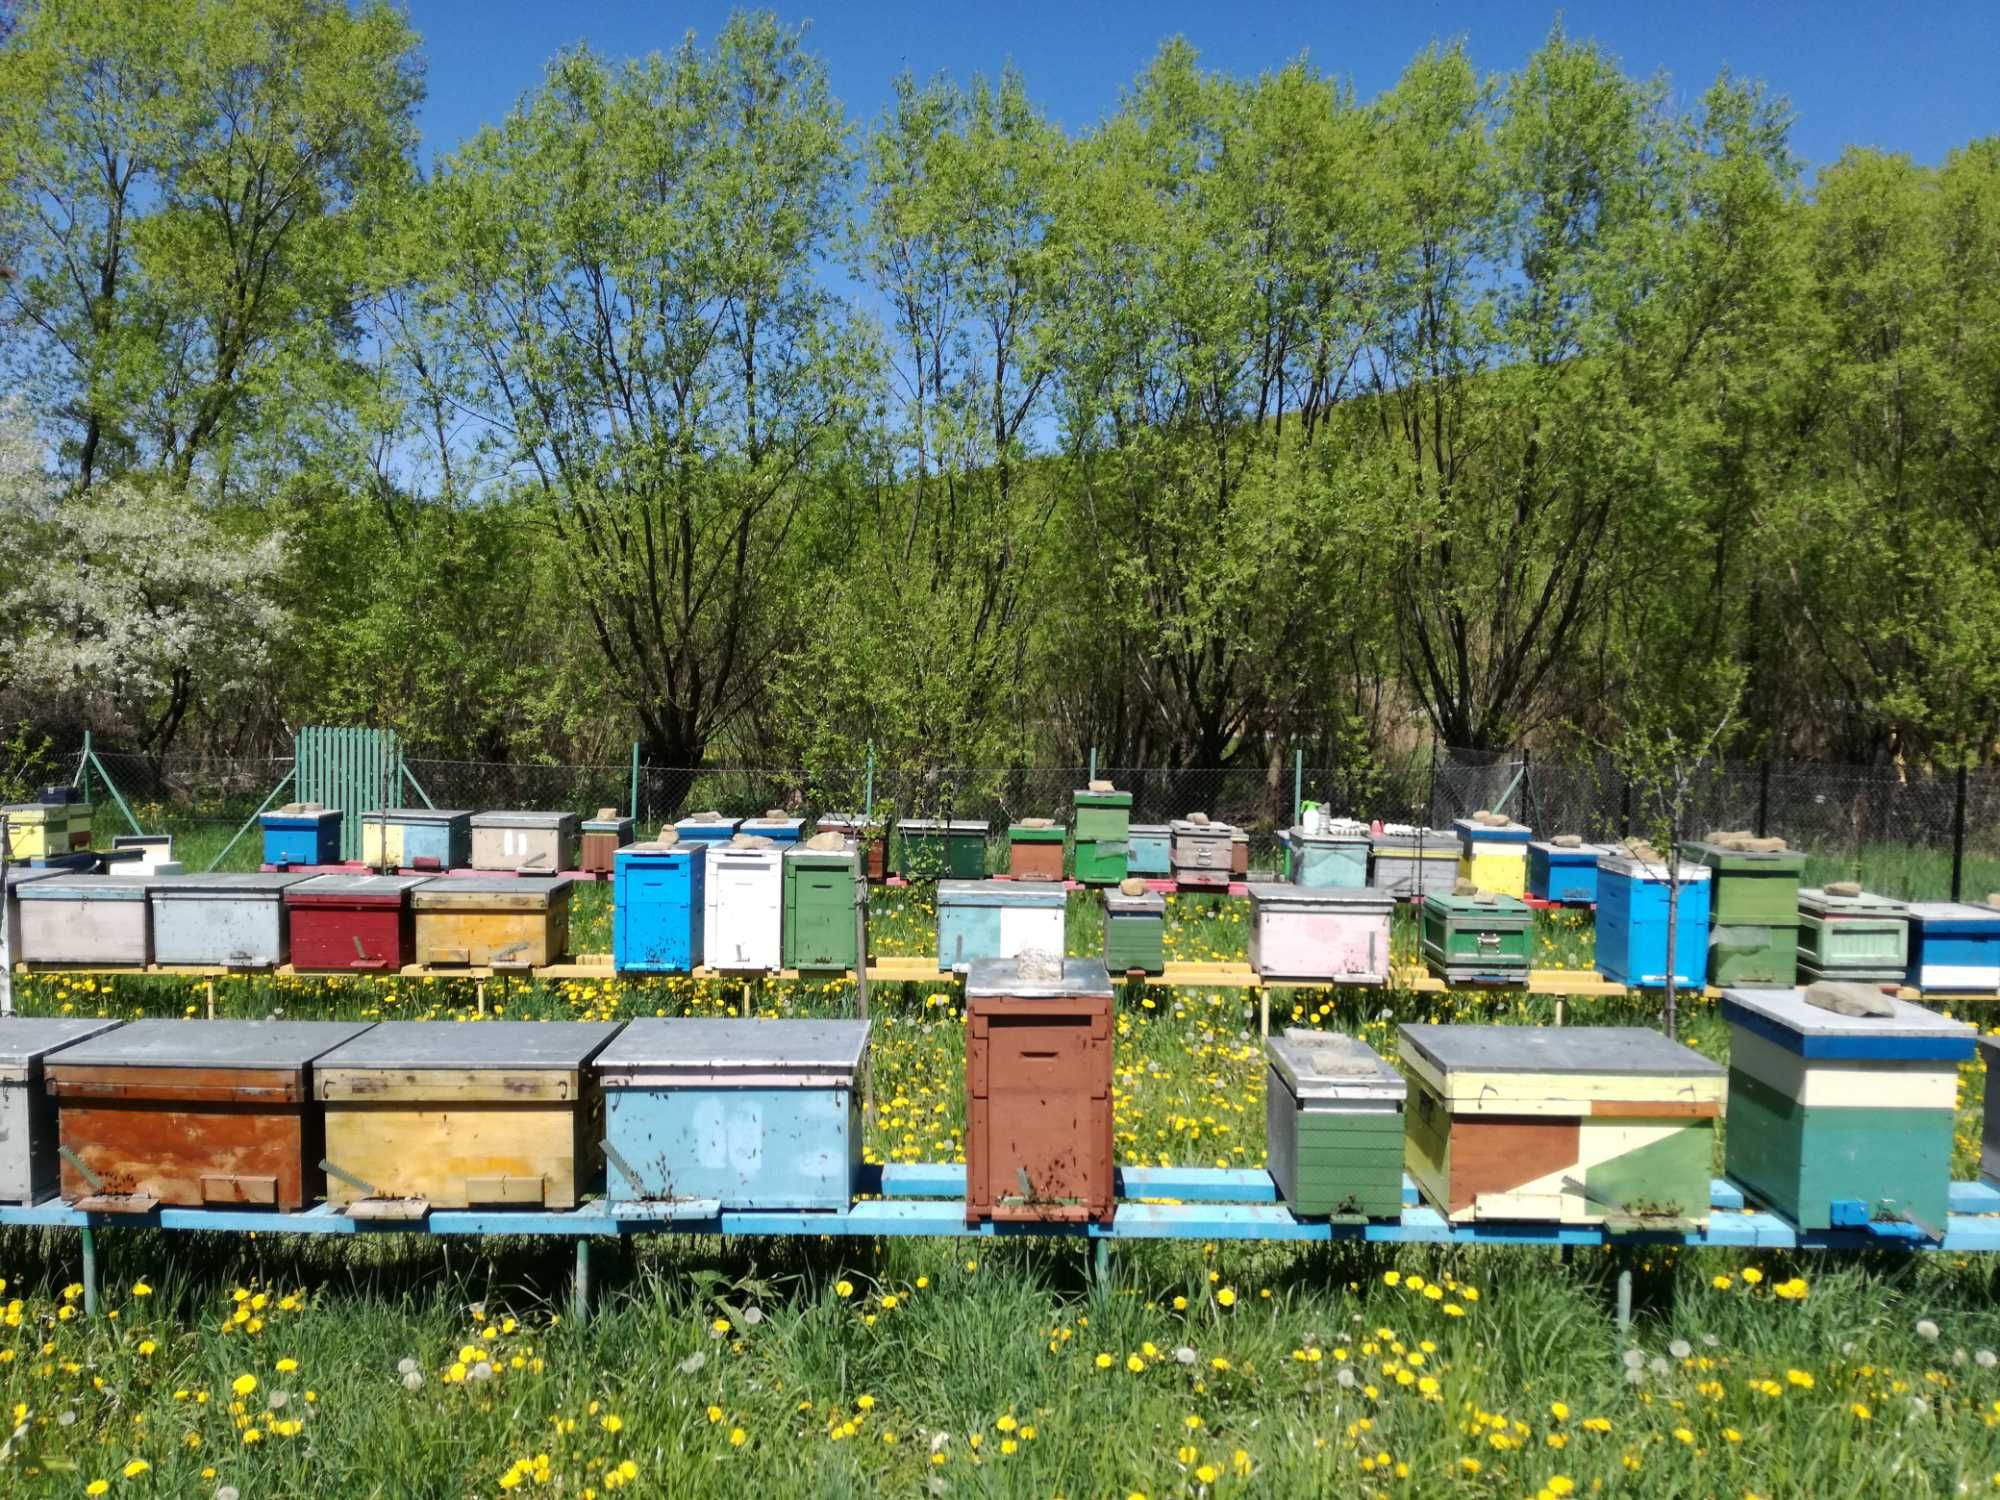 Vand familii de albine sau roiuri